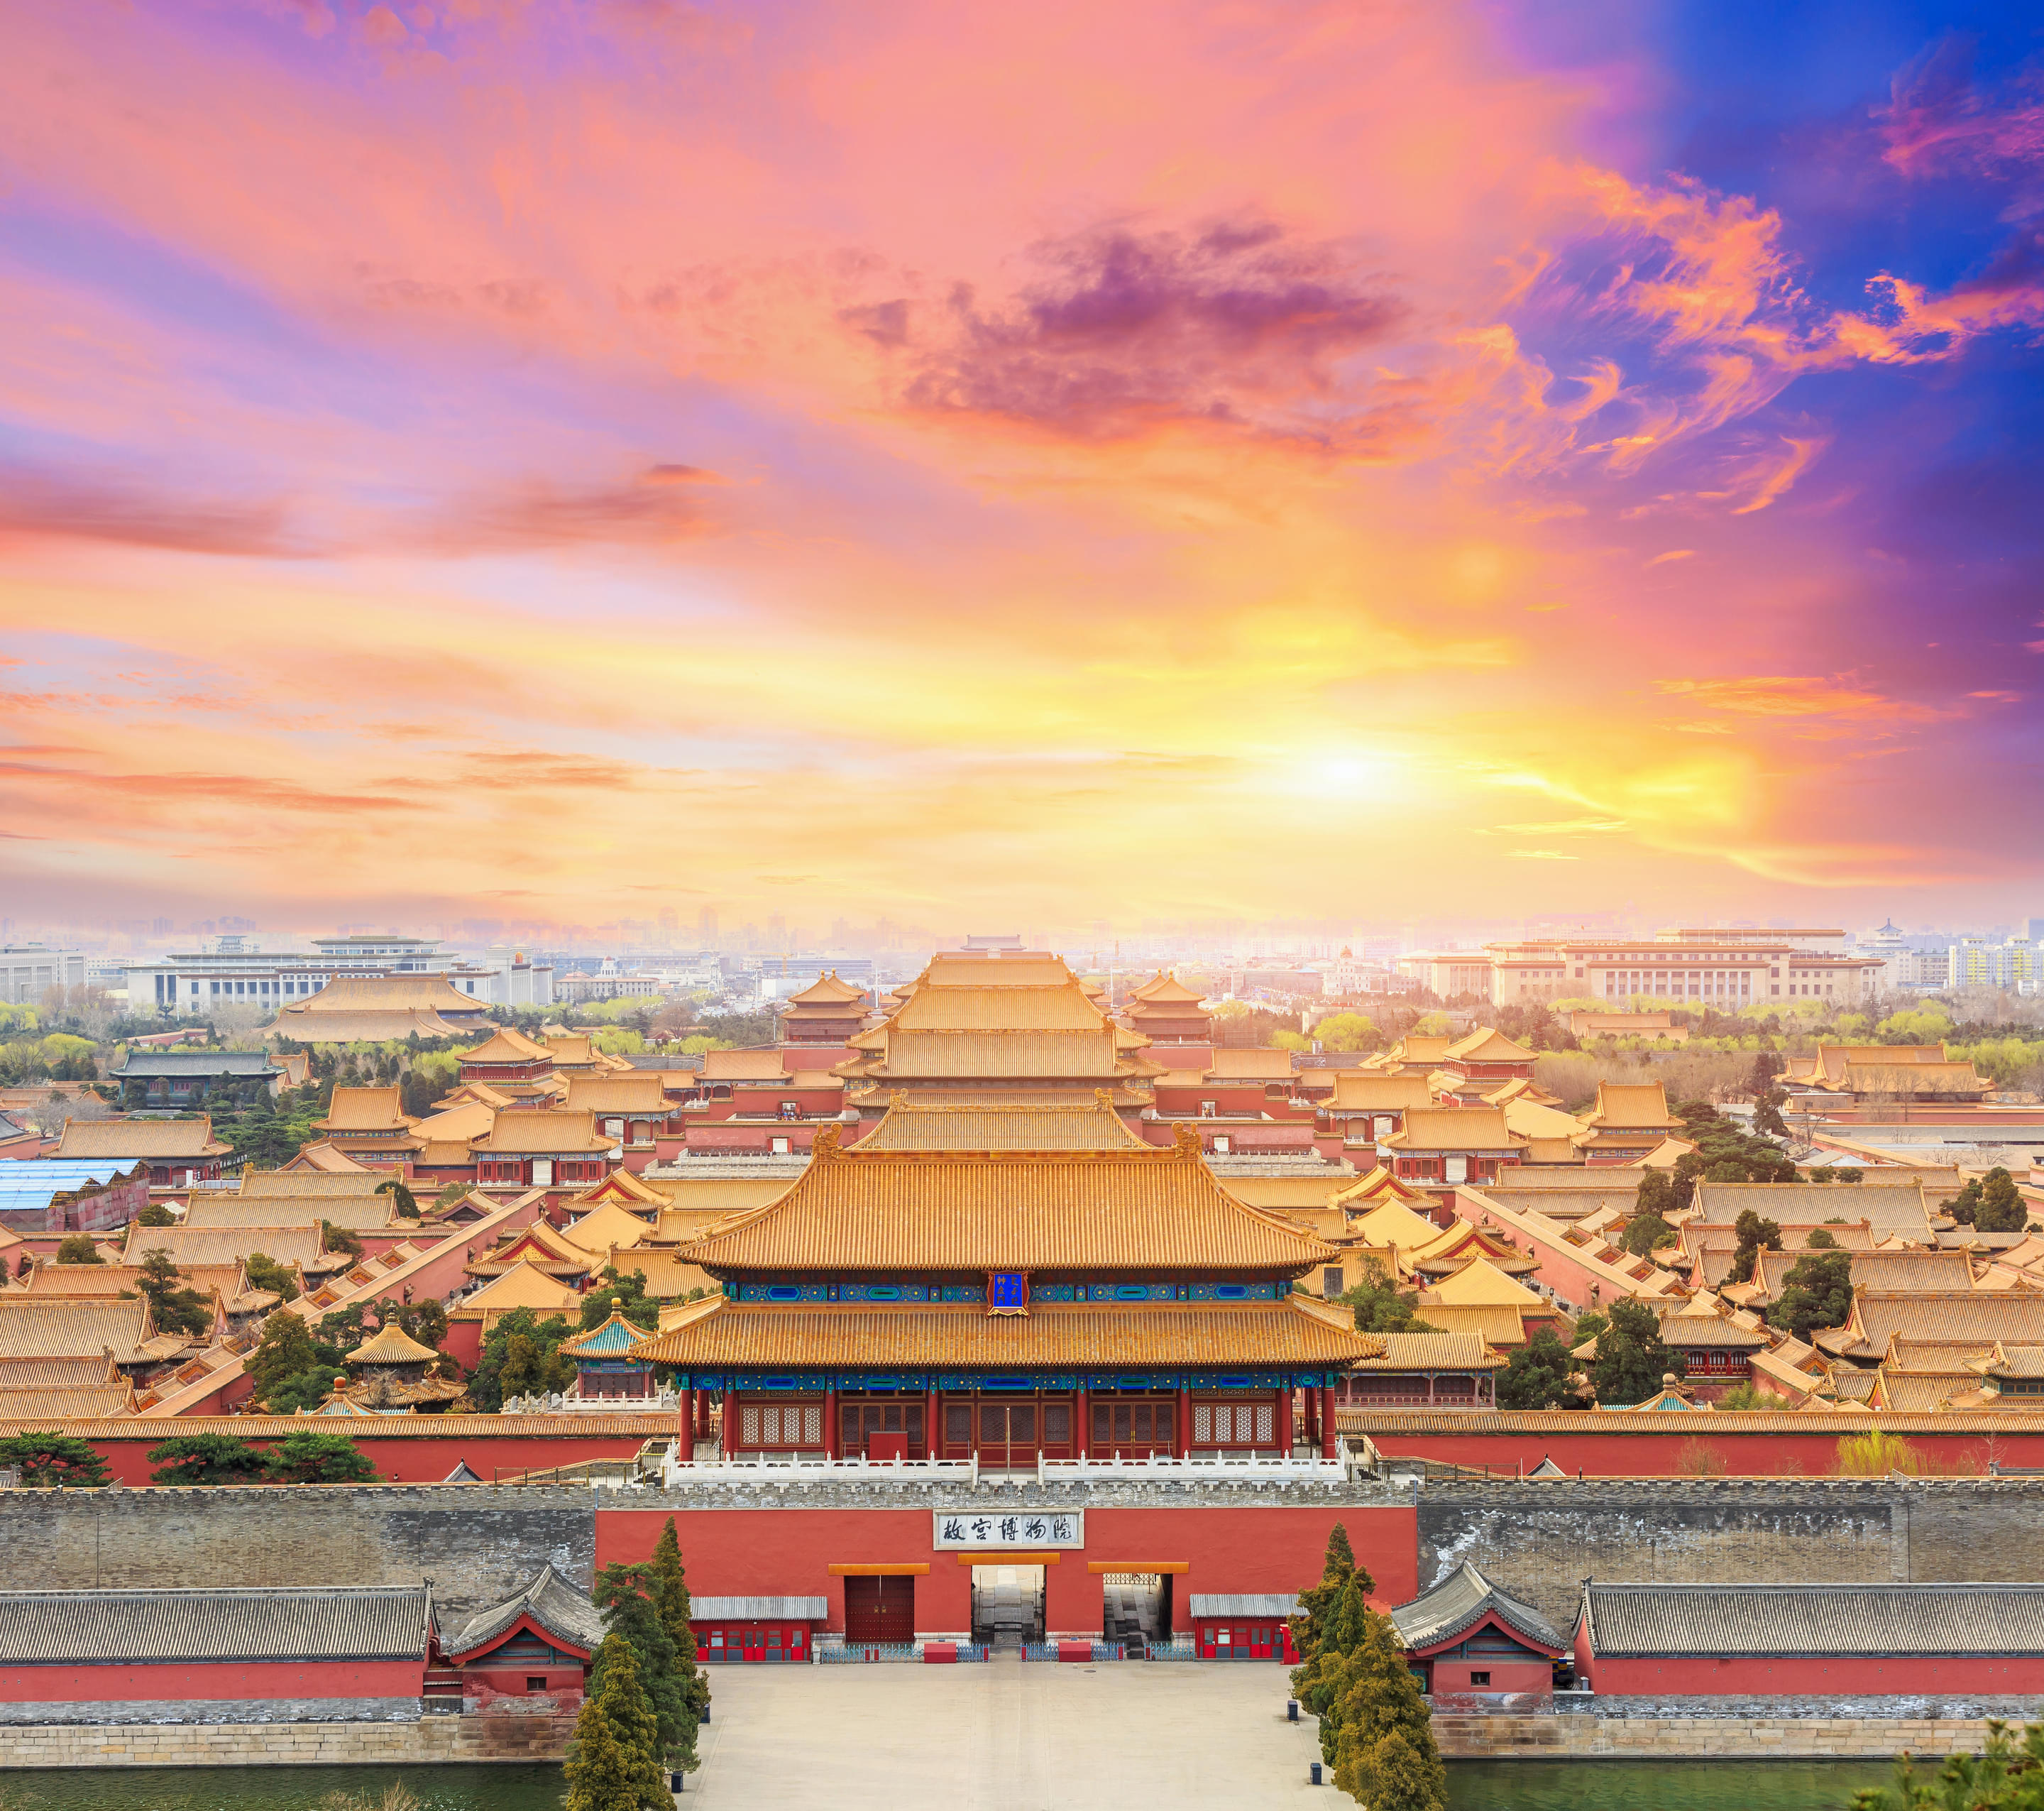 Forbidden City Overview